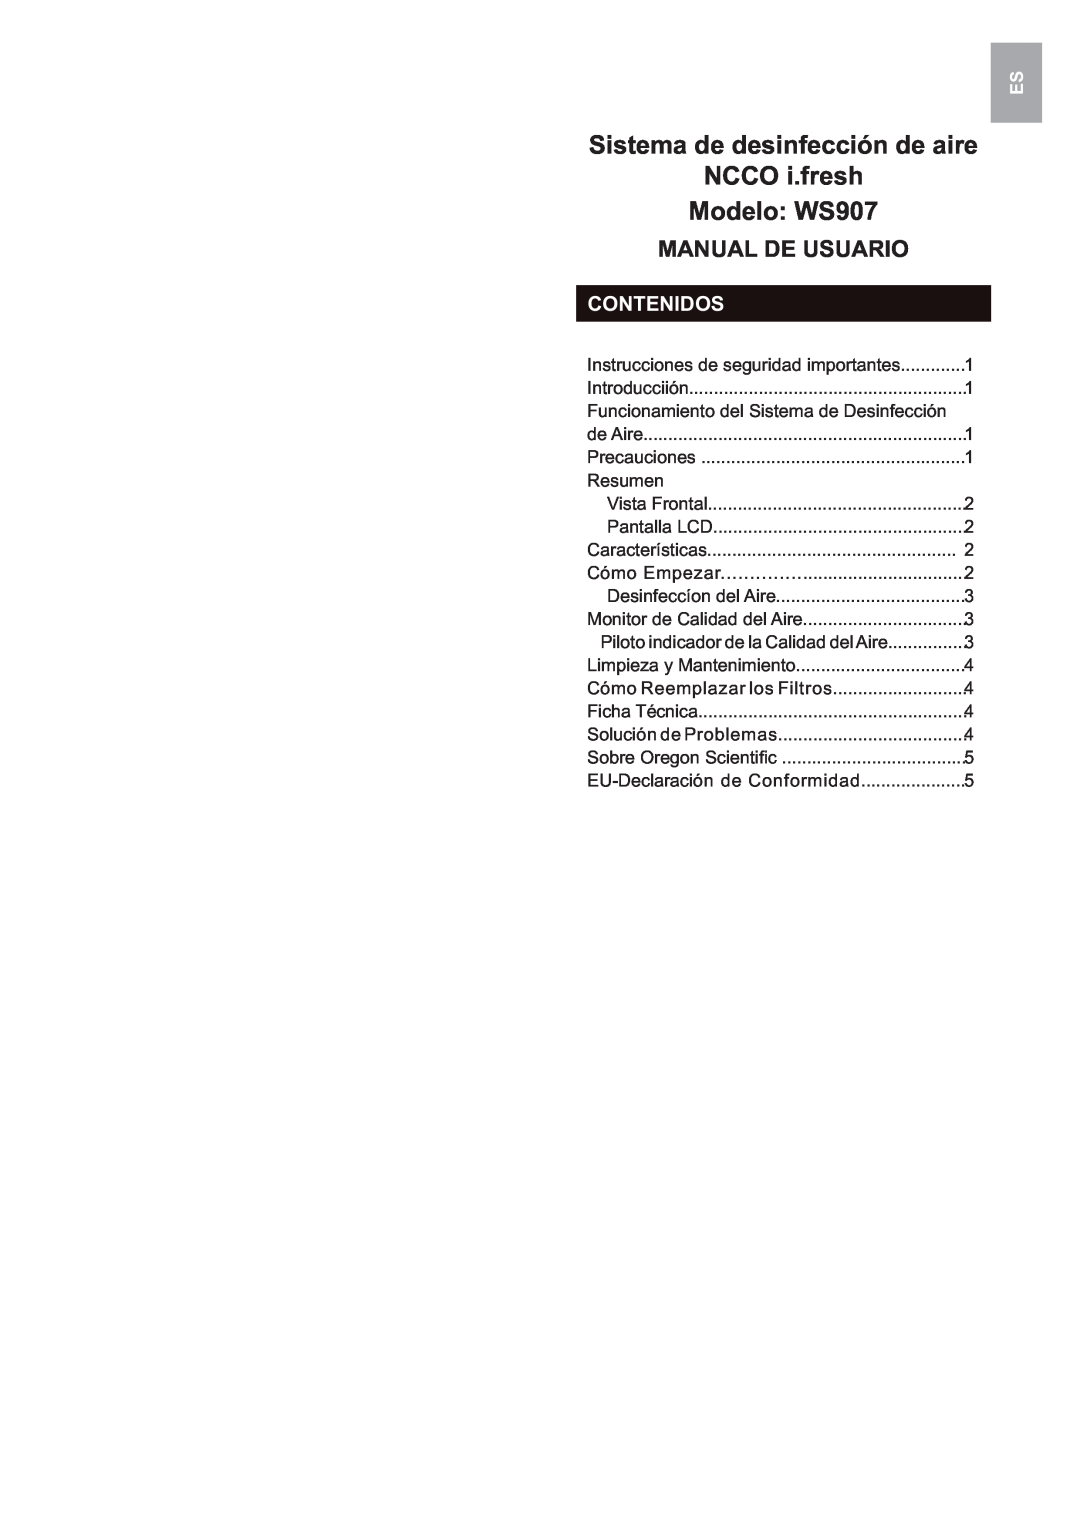 Oregon Scientific user manual Sistema de desinfección de aire NCCO i.fresh, Modelo WS907, Manual De Usuario, Contenidos 